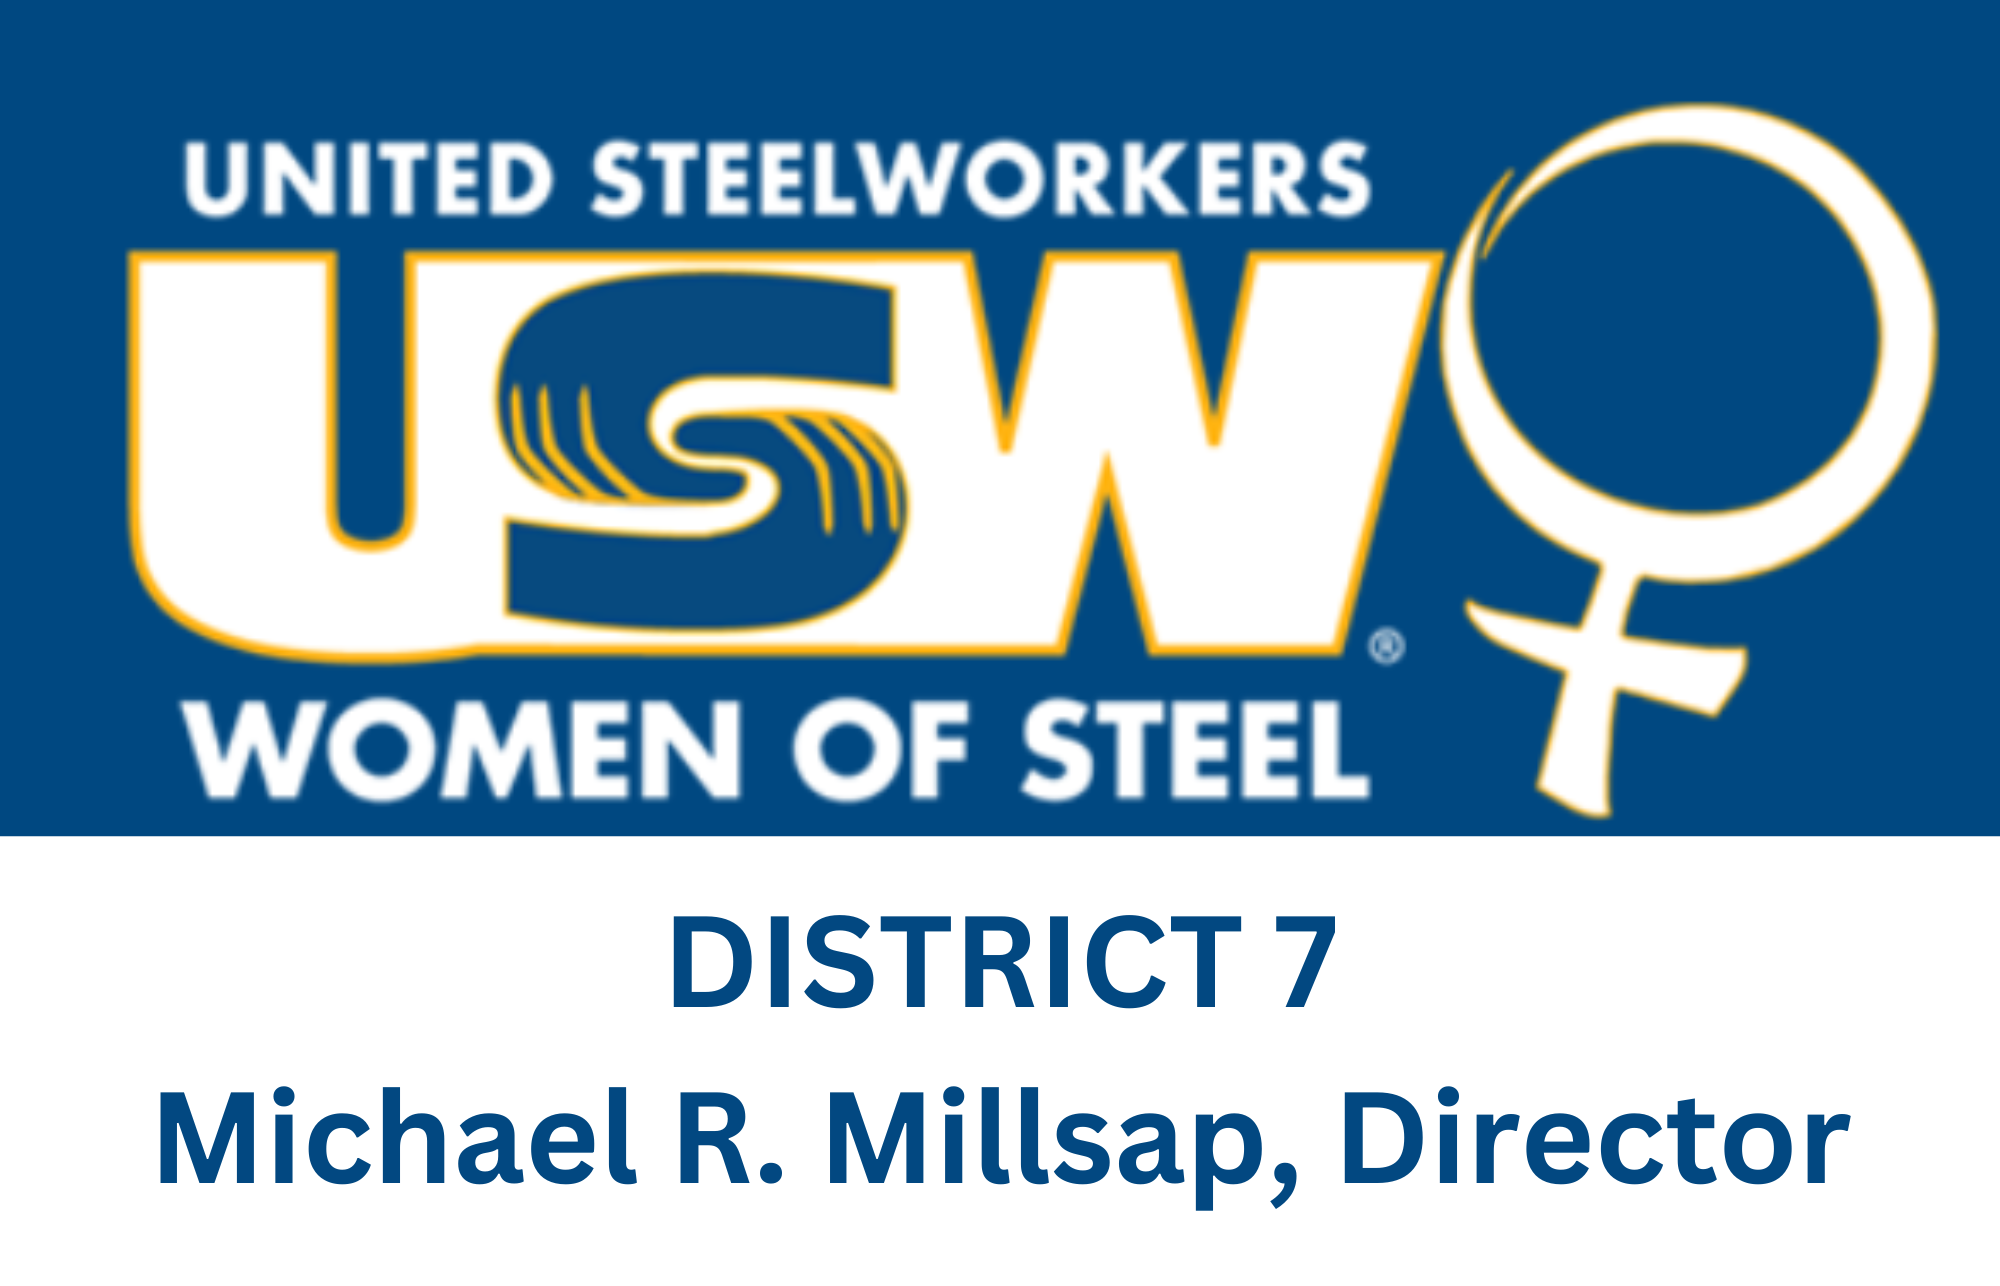 USW Women of Steel District 7